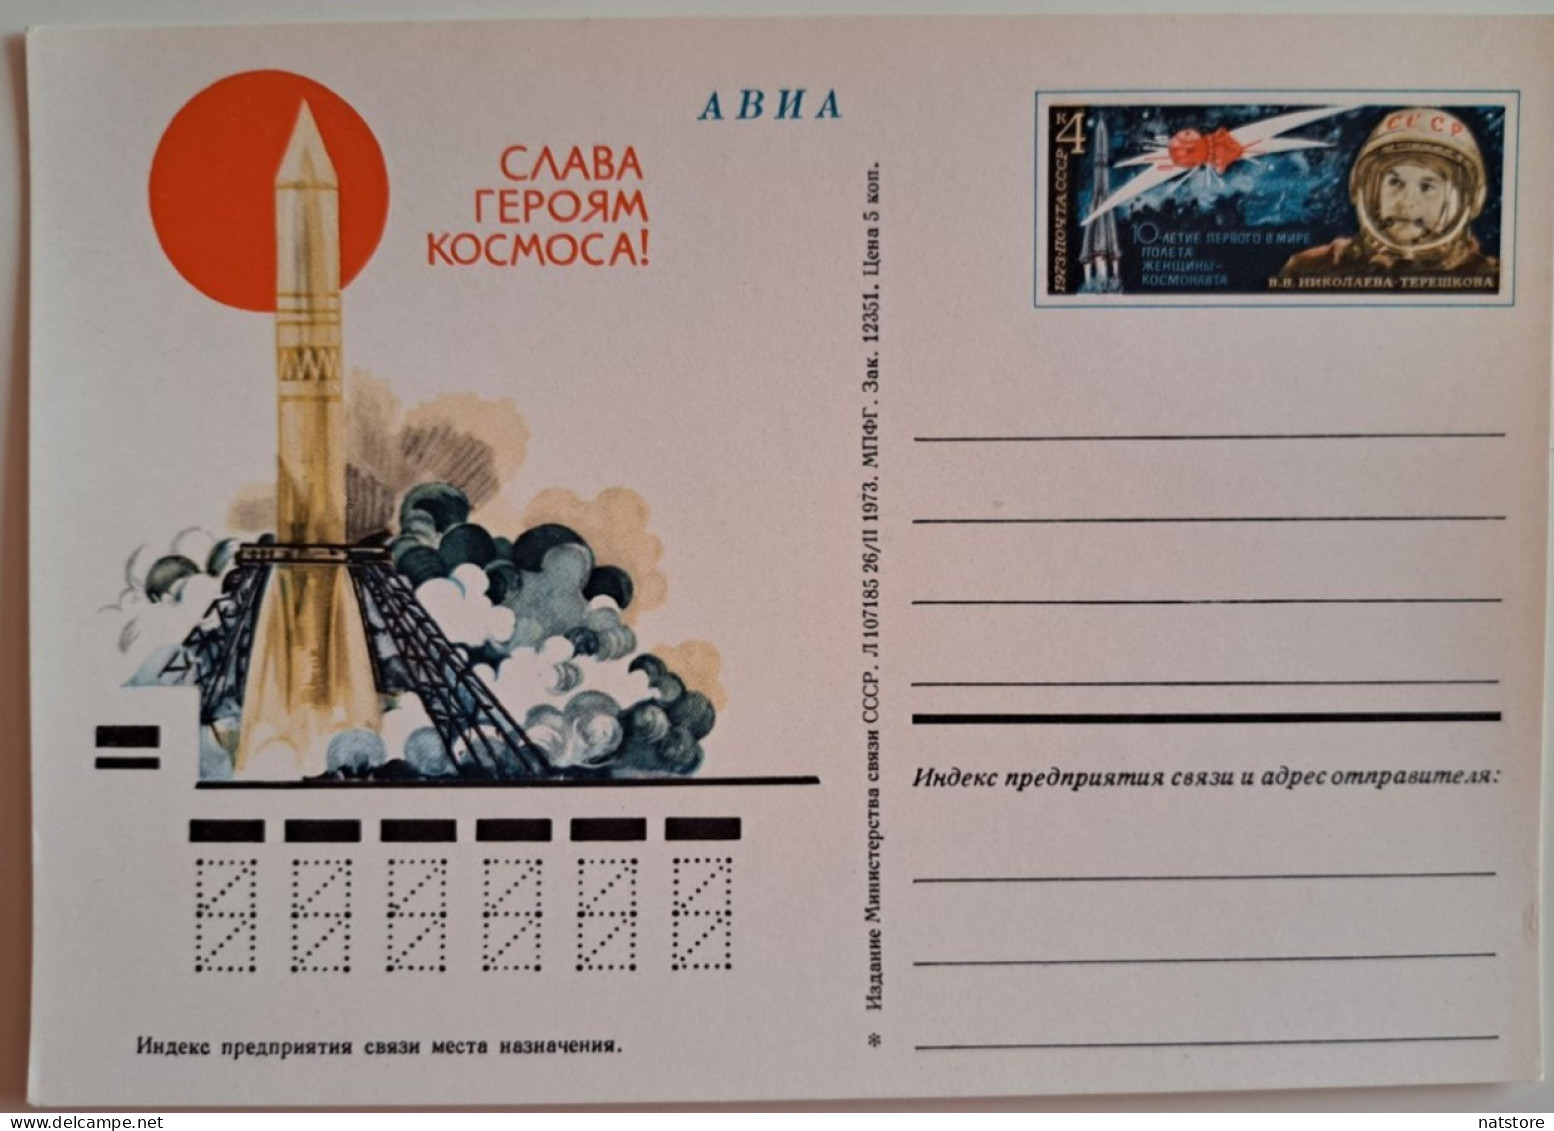 1973..USSR..POSTAL CARD  WITH STAMP..GLORY TO SPACE HEROES..V.V.NIKOLAEVA-TERESHKOVA - Russia & USSR